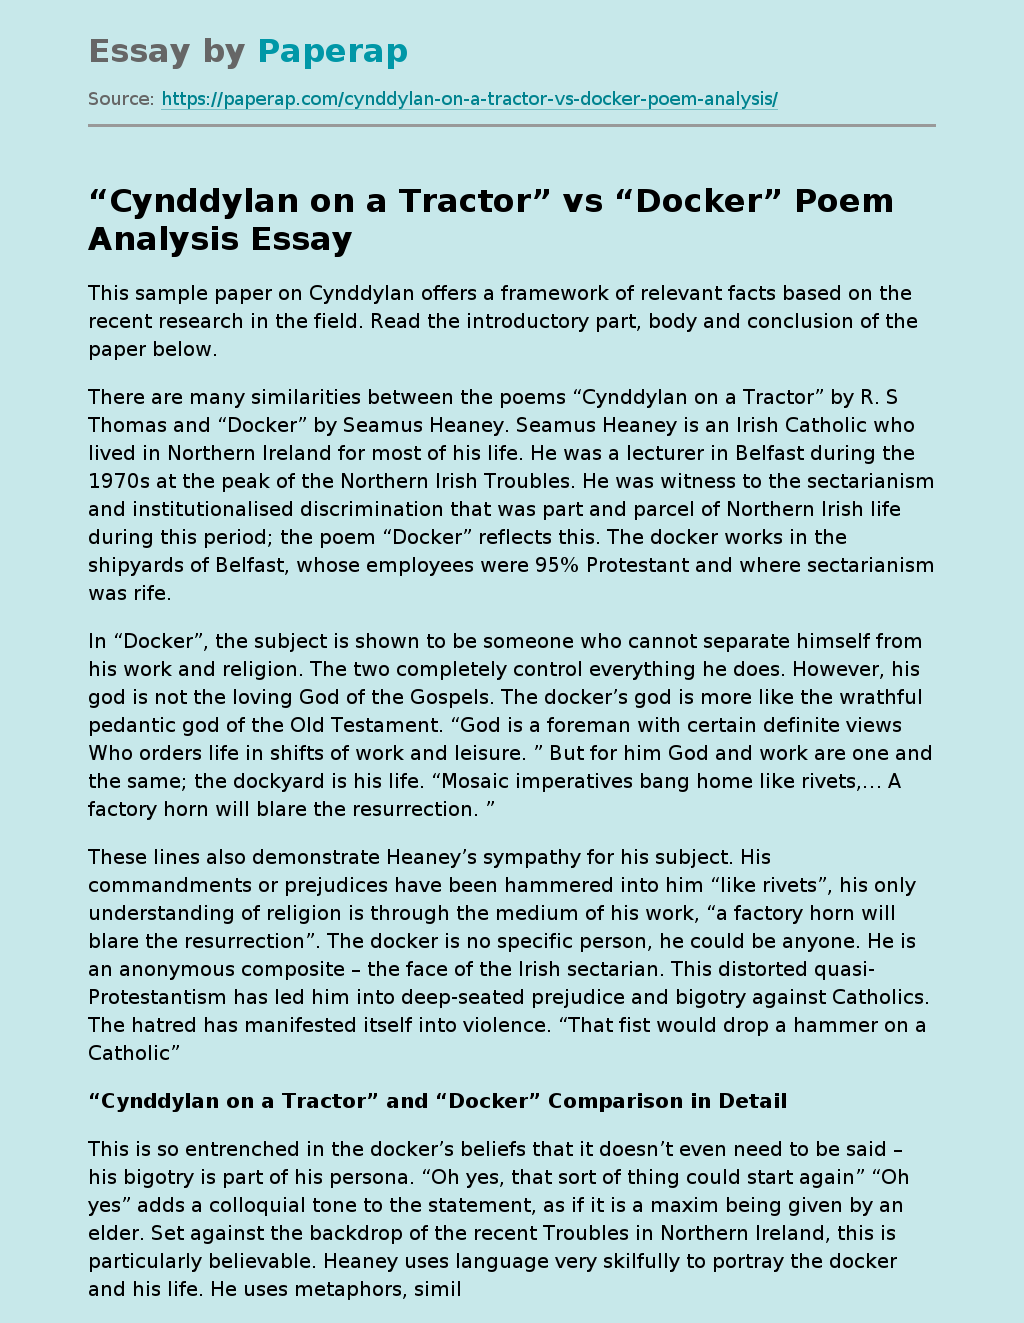 “Cynddylan on a Tractor” vs “Docker” Poem Analysis